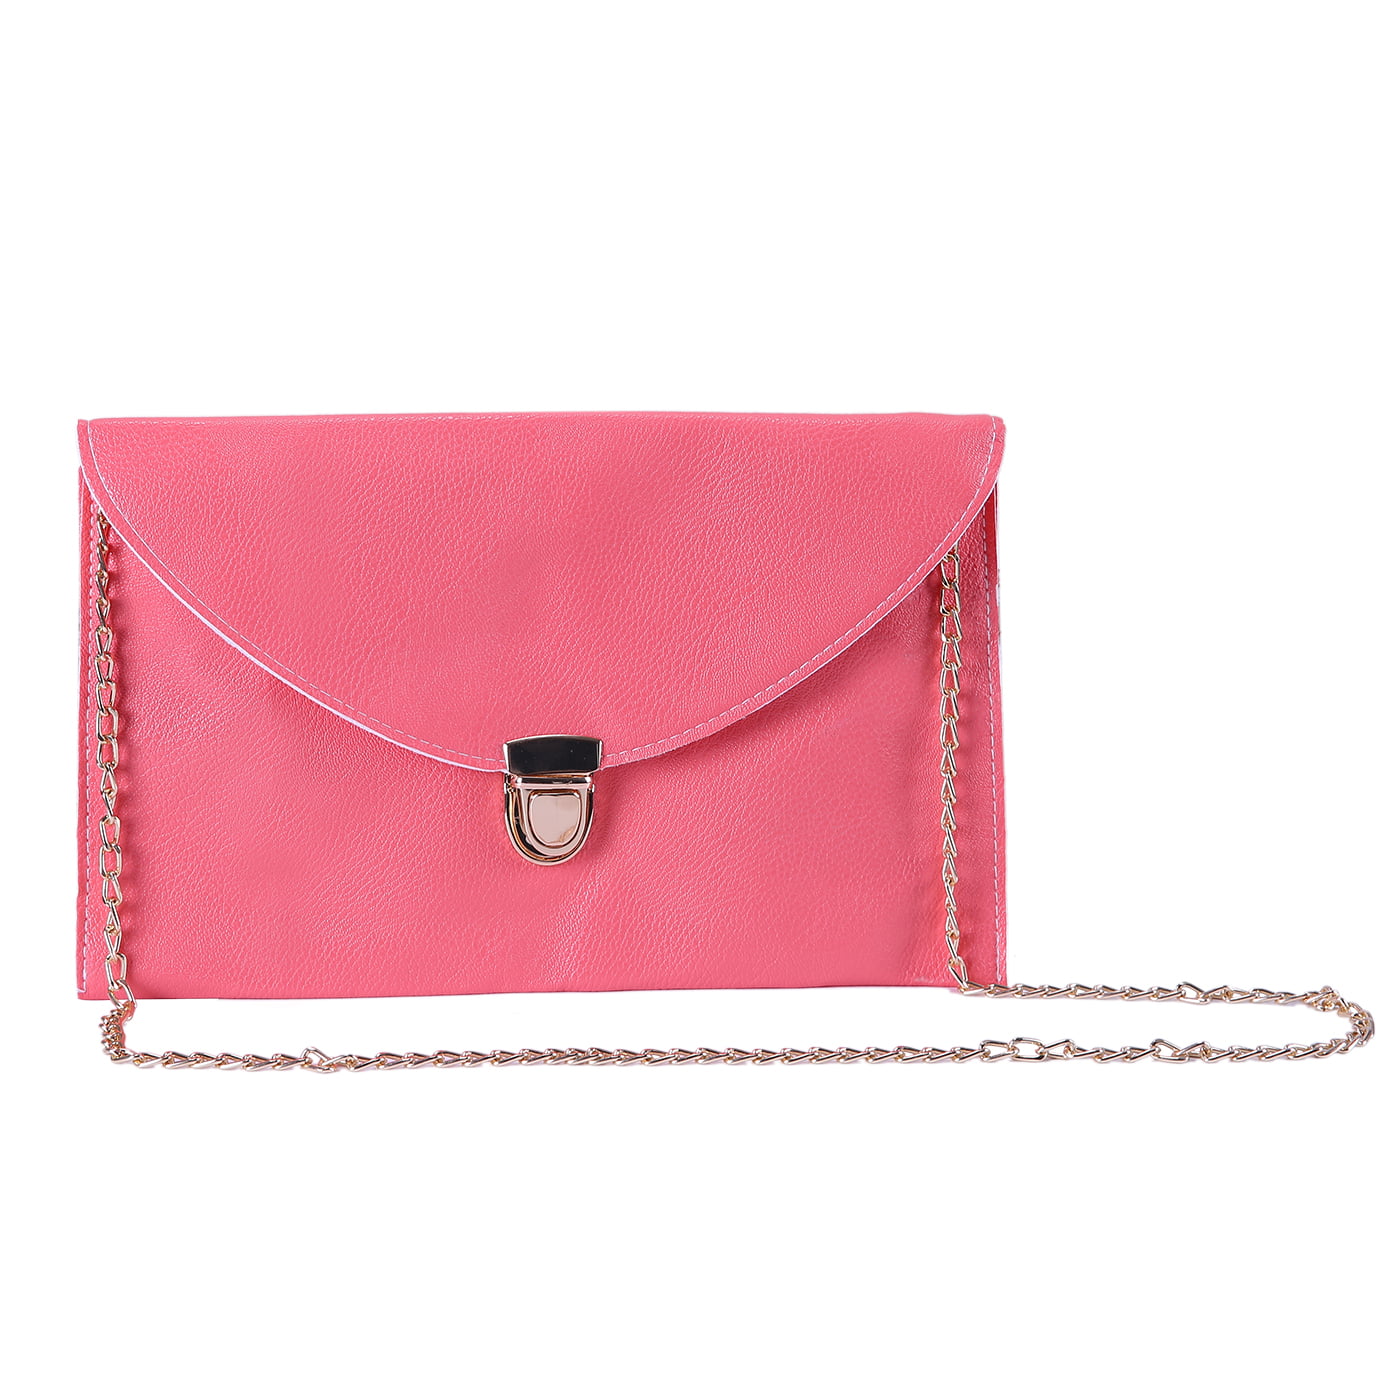 Black Arae Clutch Purses for Women Wristlet Wallet Handbag 